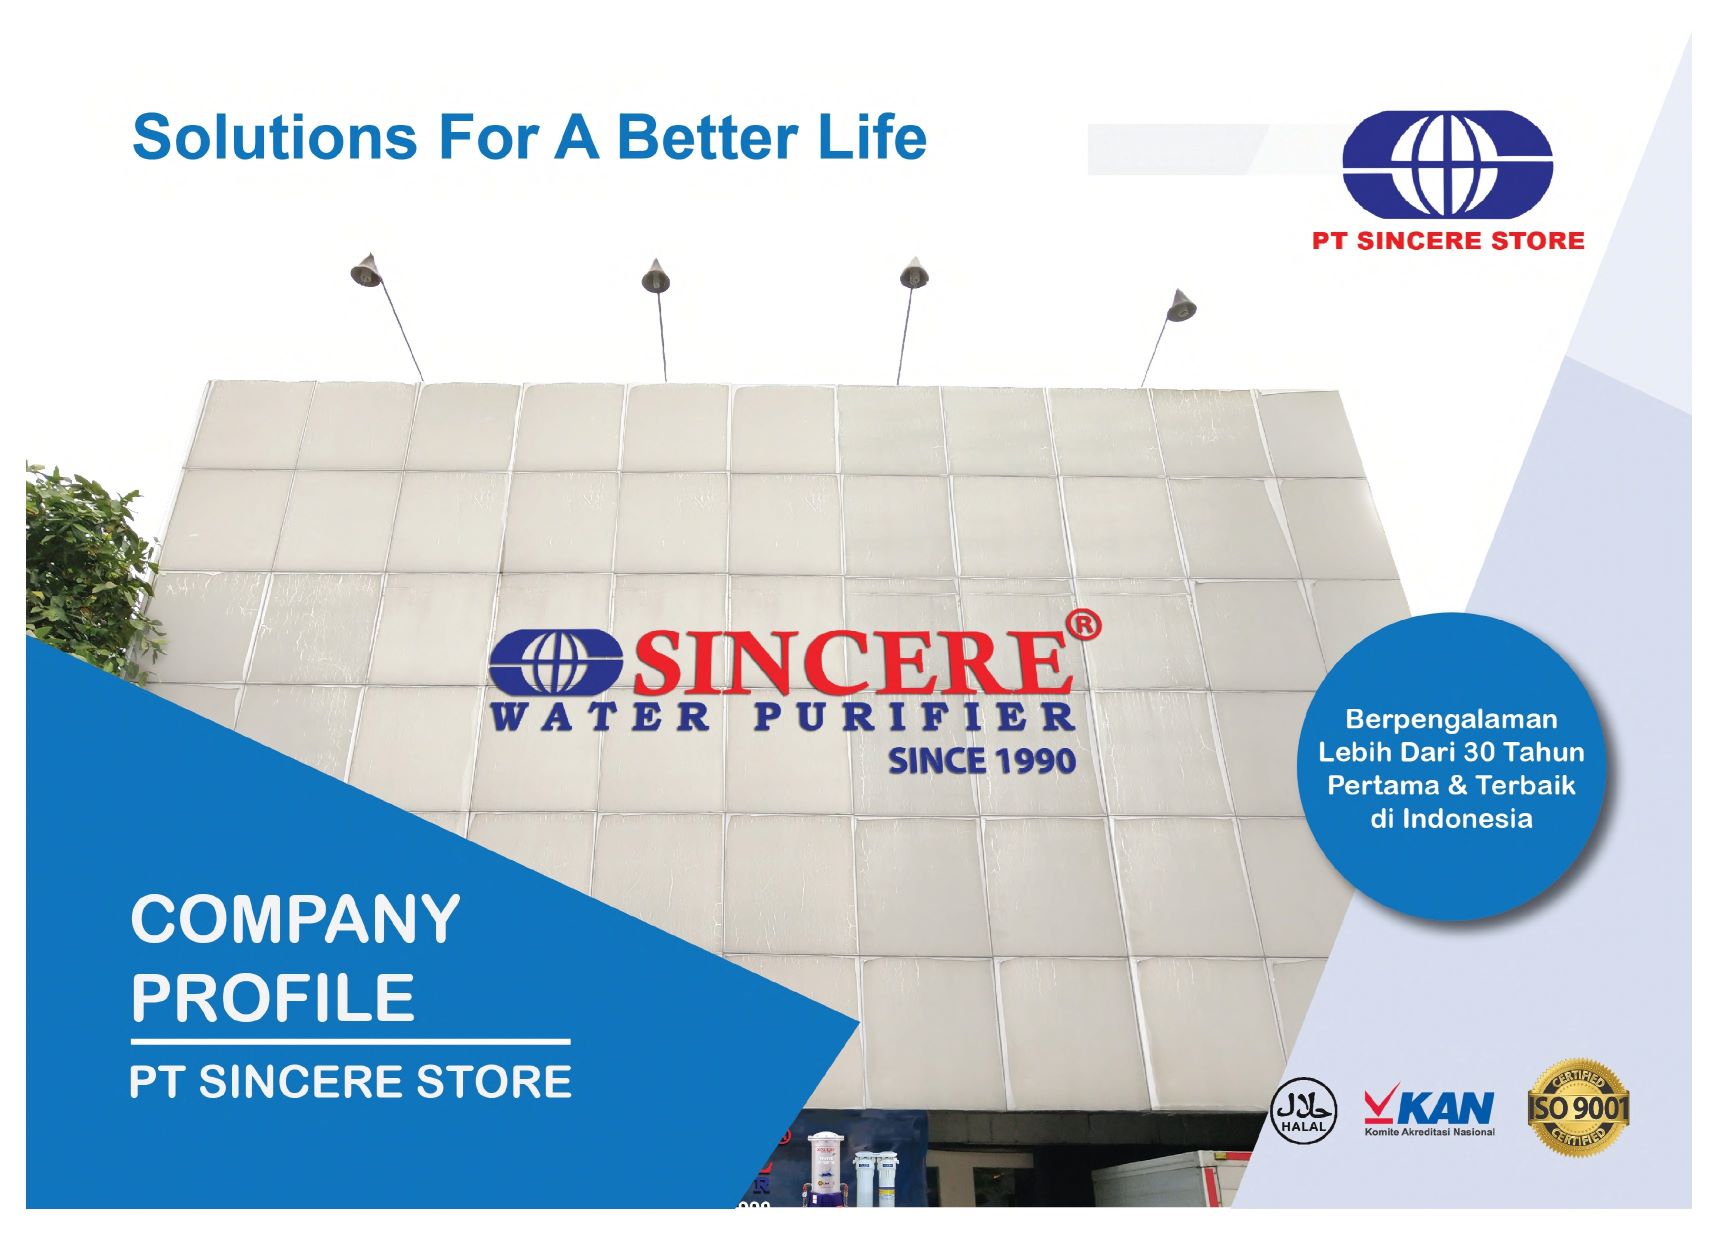 sincere water pufier company profile